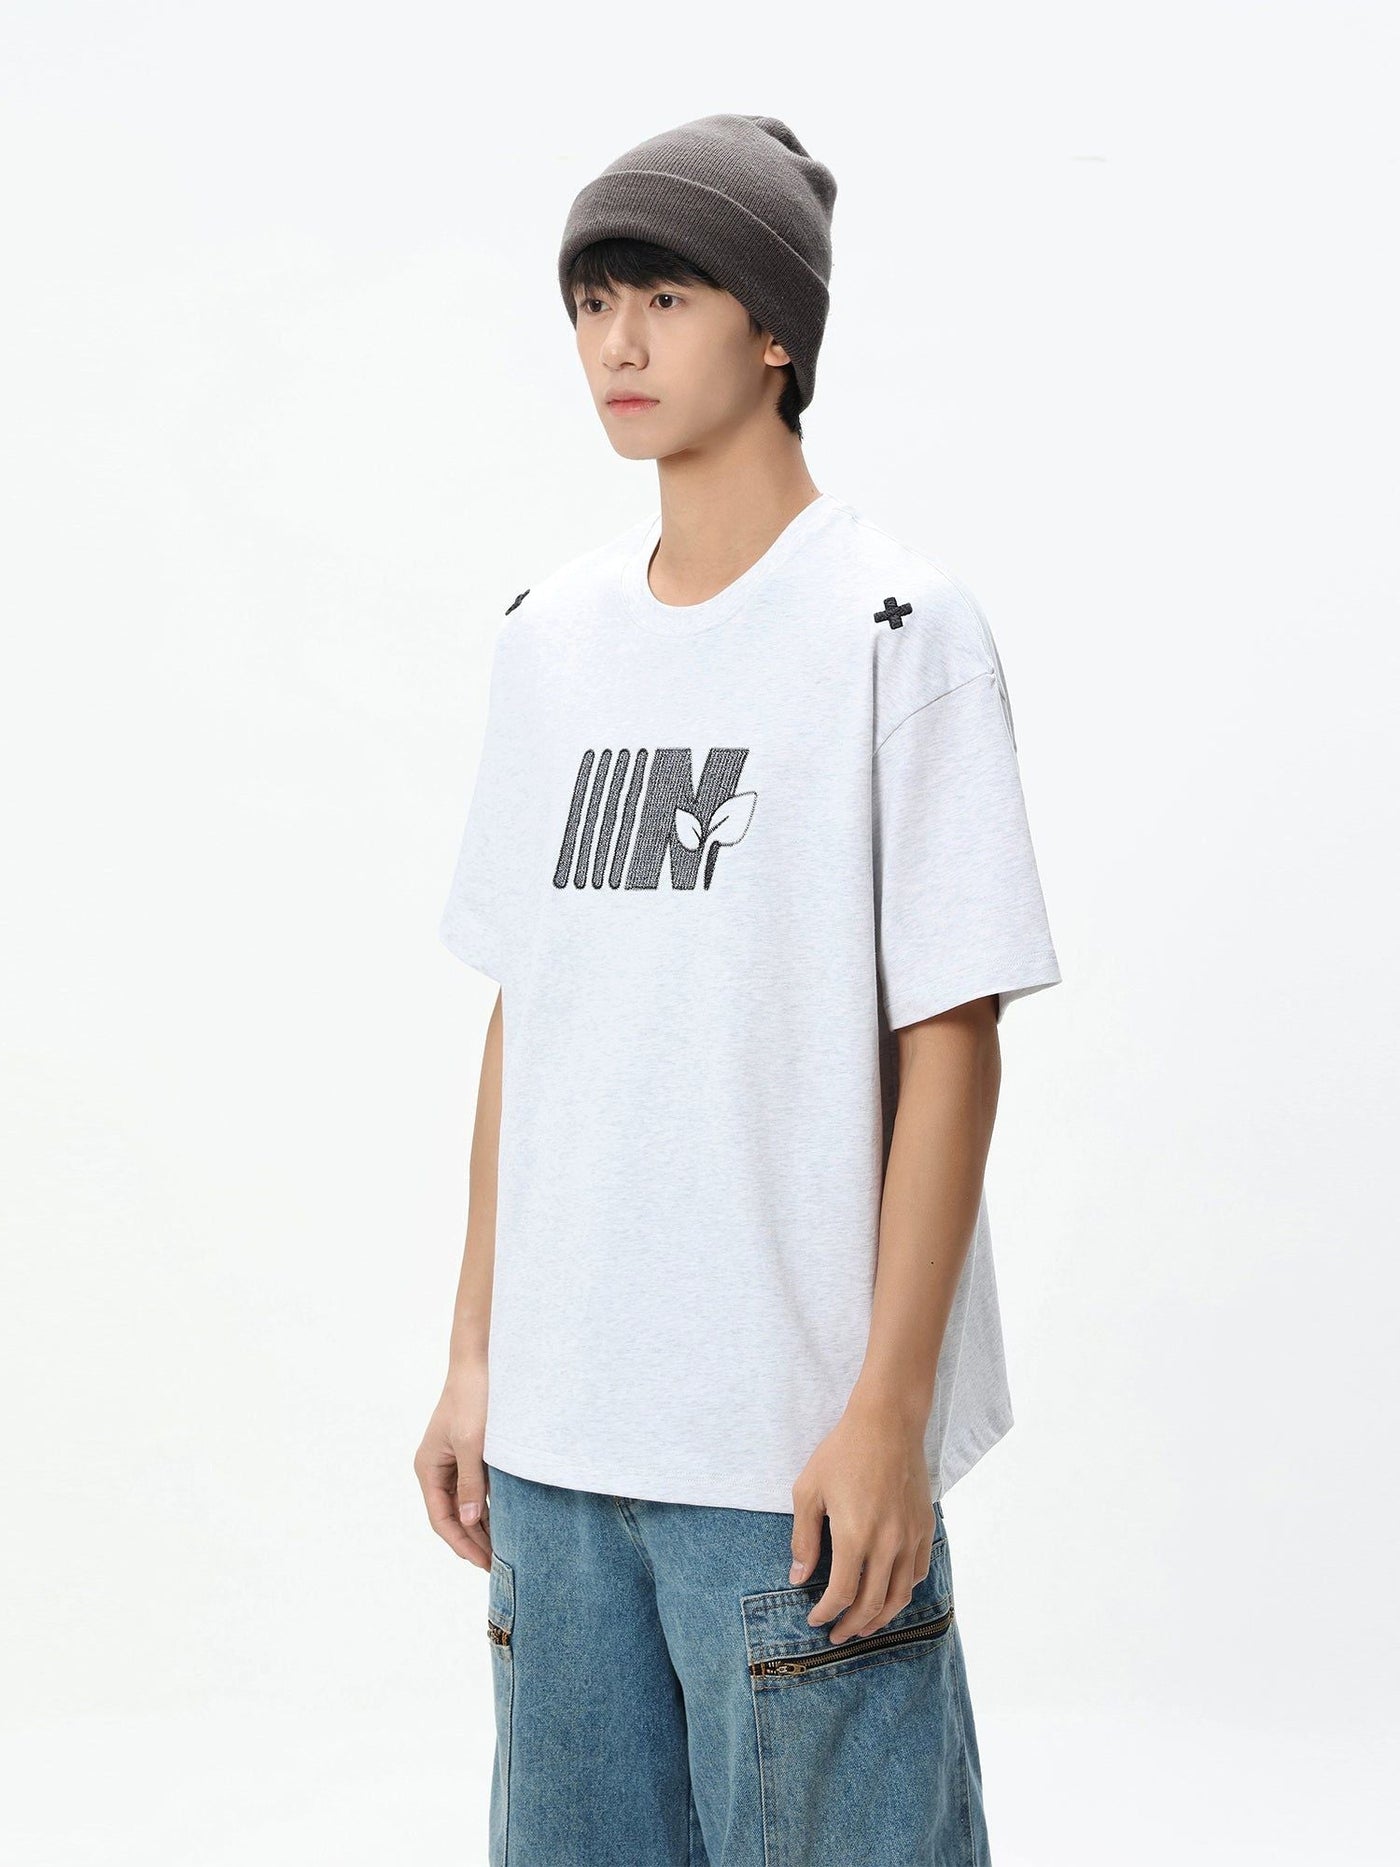 Stitching Logo Detail T-Shirt Korean Street Fashion T-Shirt By Jump Next Shop Online at OH Vault